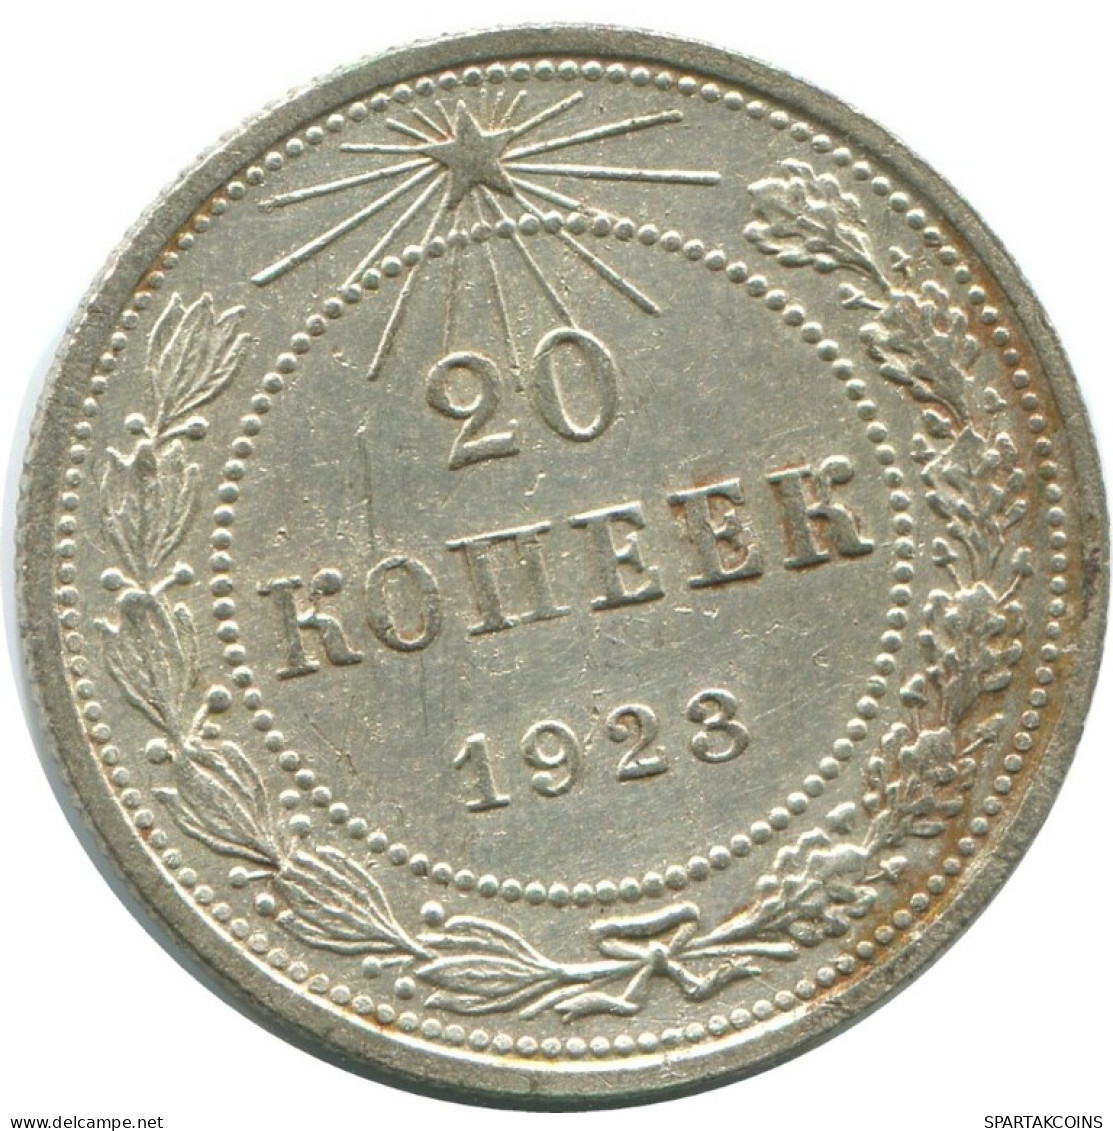 20 KOPEKS 1923 RUSSLAND RUSSIA RSFSR SILBER Münze HIGH GRADE #AF632.D.A - Russie